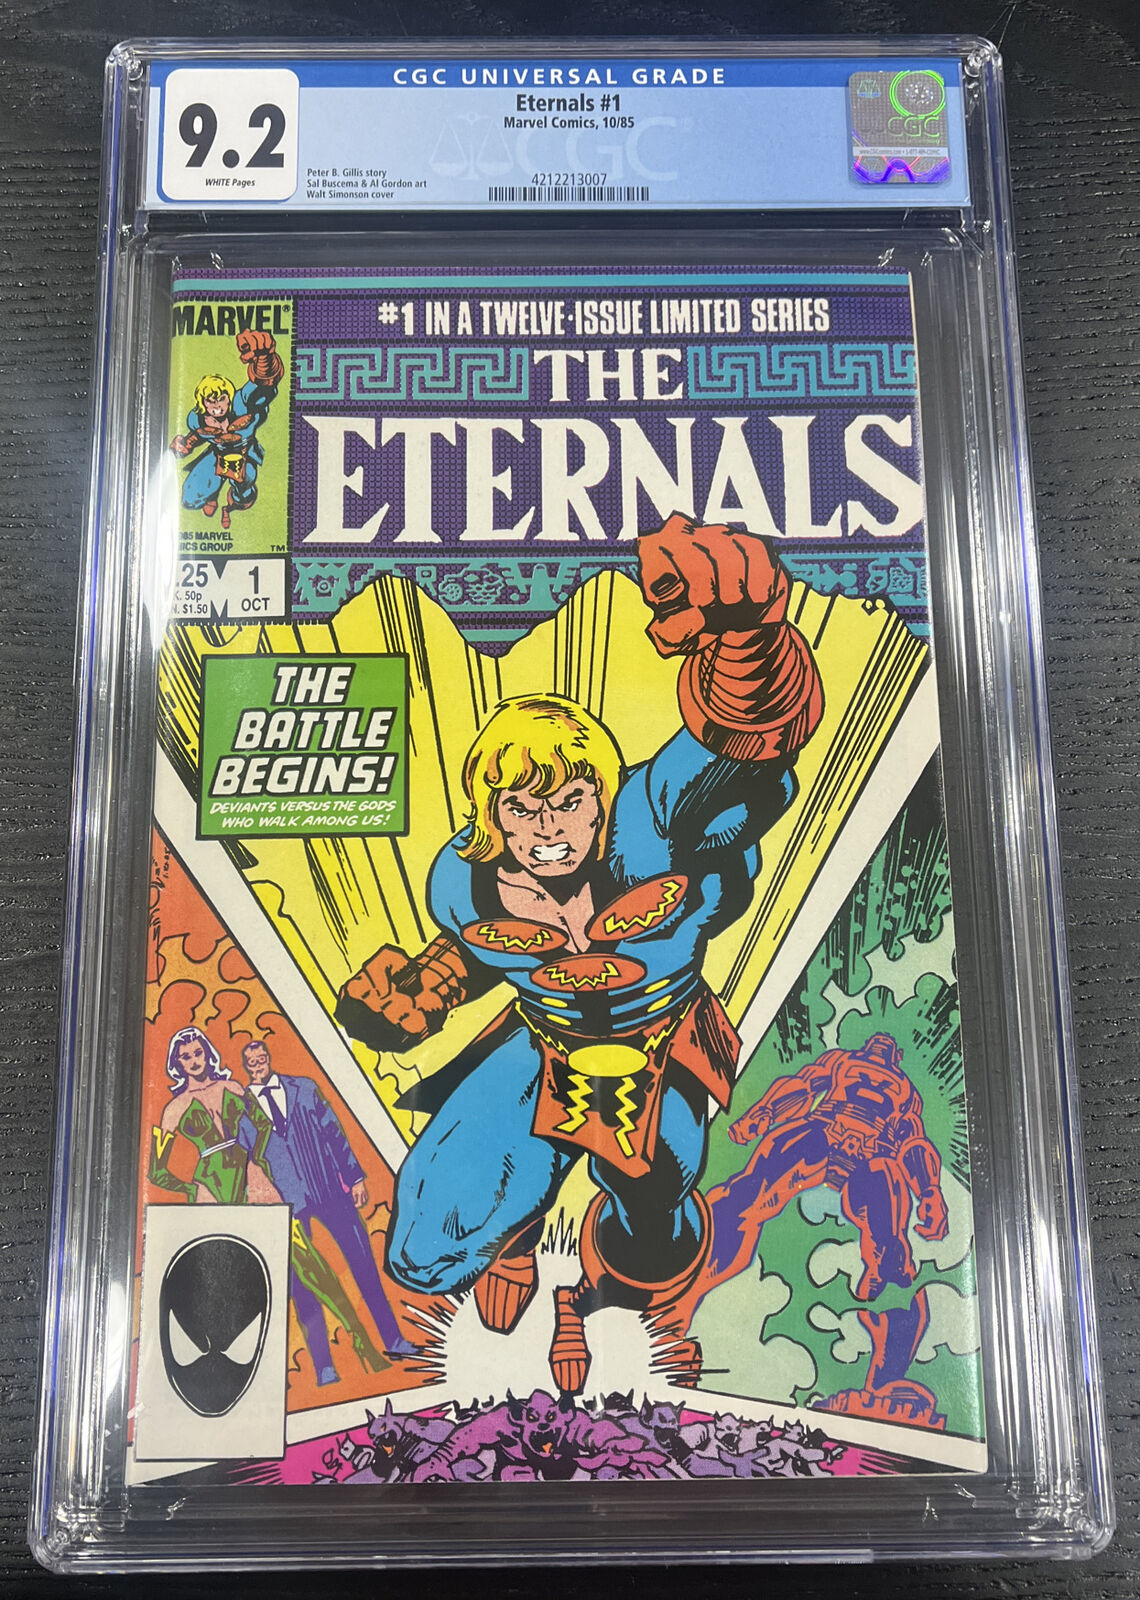 Marvel Comics 1985 Eternals #1 CGC 9.2 1st appearance of Phastos